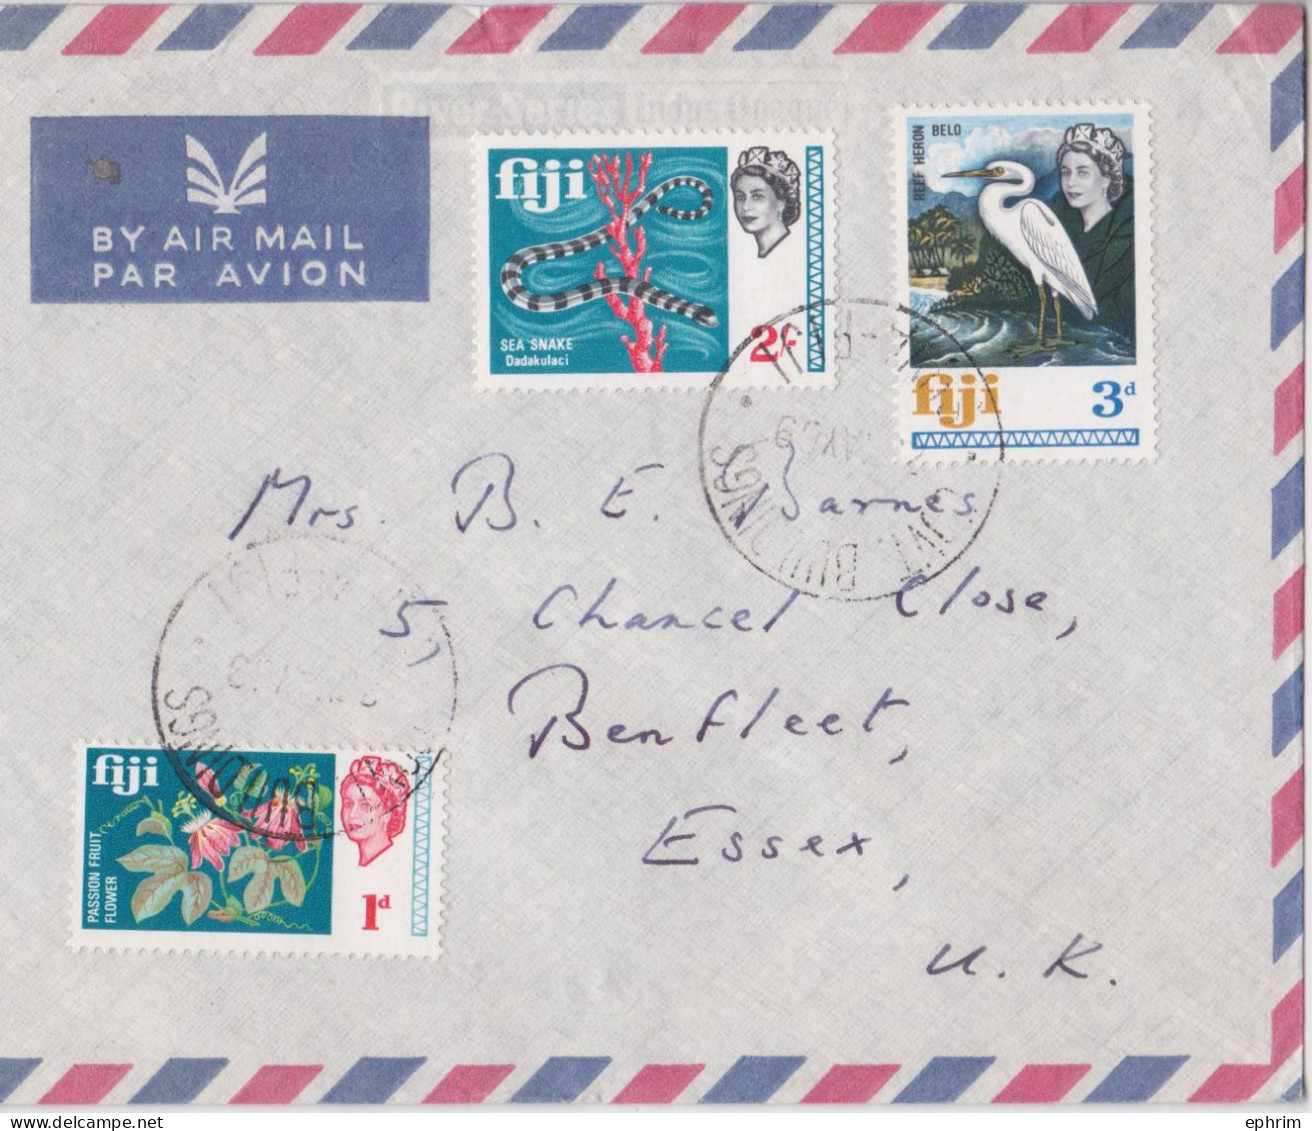 Fidji Fiji Lettre Timbre Fleurs Serpent De Mer Héron Sea Snake Flowers Stamp Air Mail Cover 1969 - Fiji (...-1970)